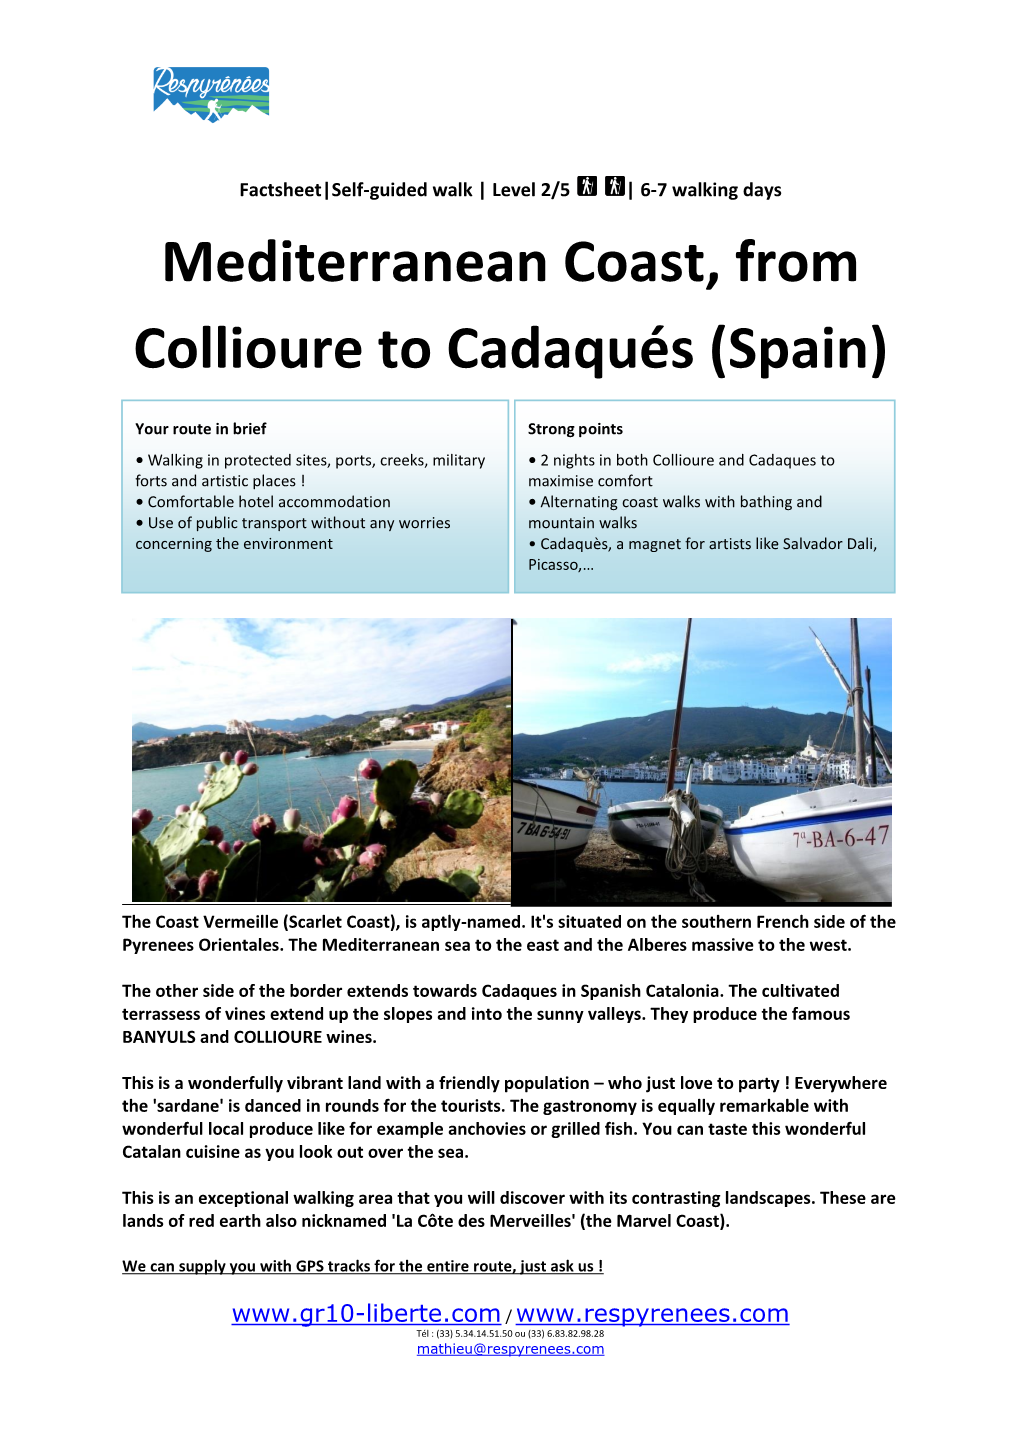 Mediterranean Coast, from Collioure to Cadaqués